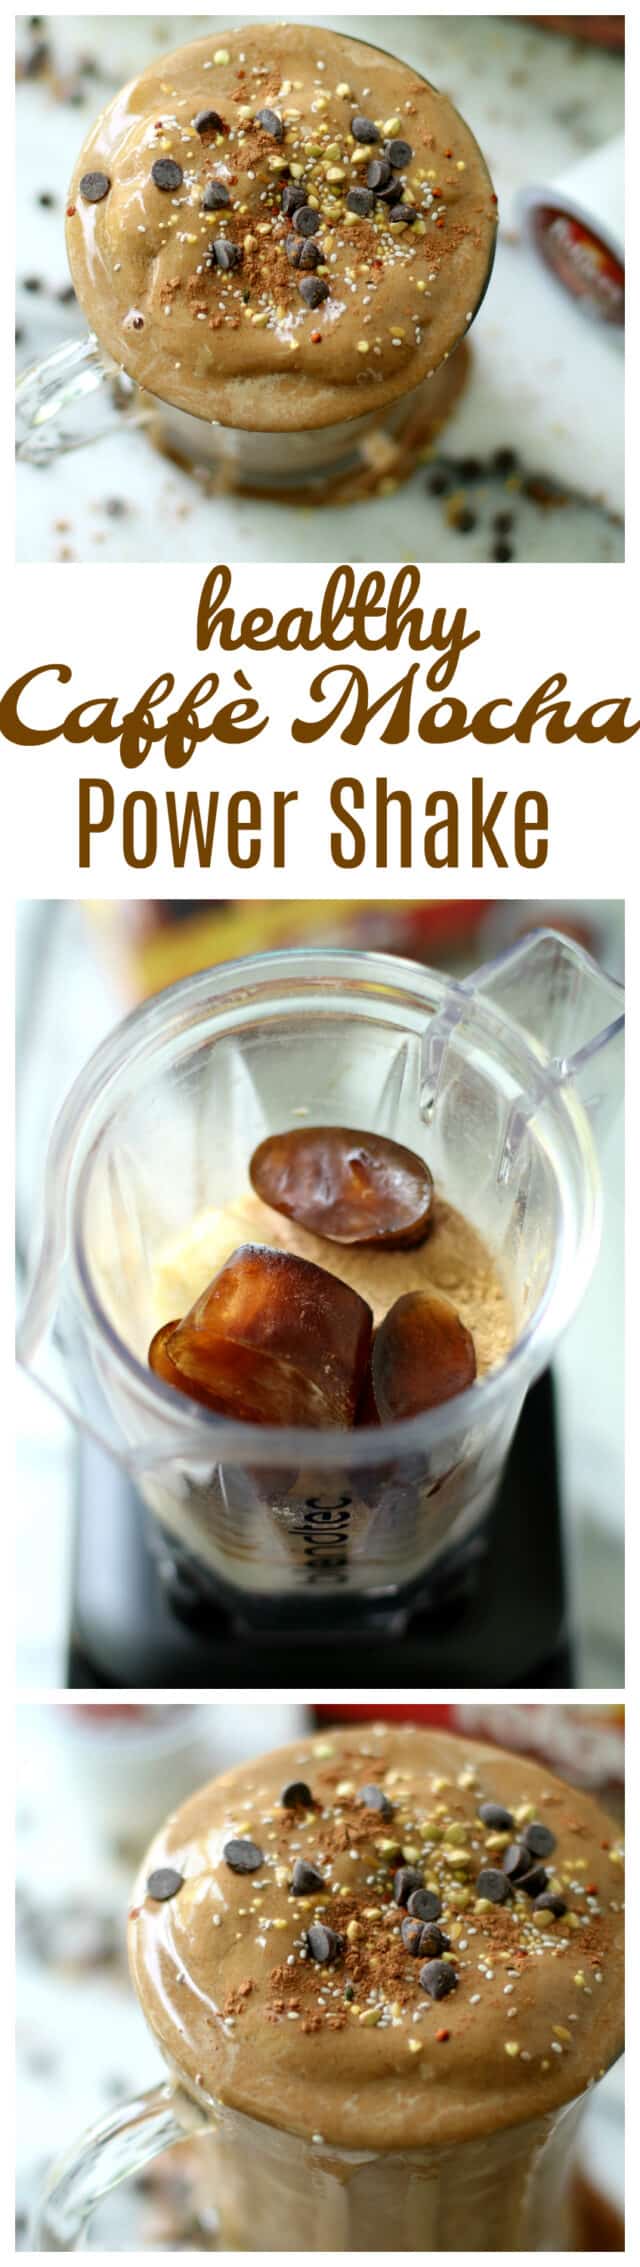 Caffè Mocha Power Shake